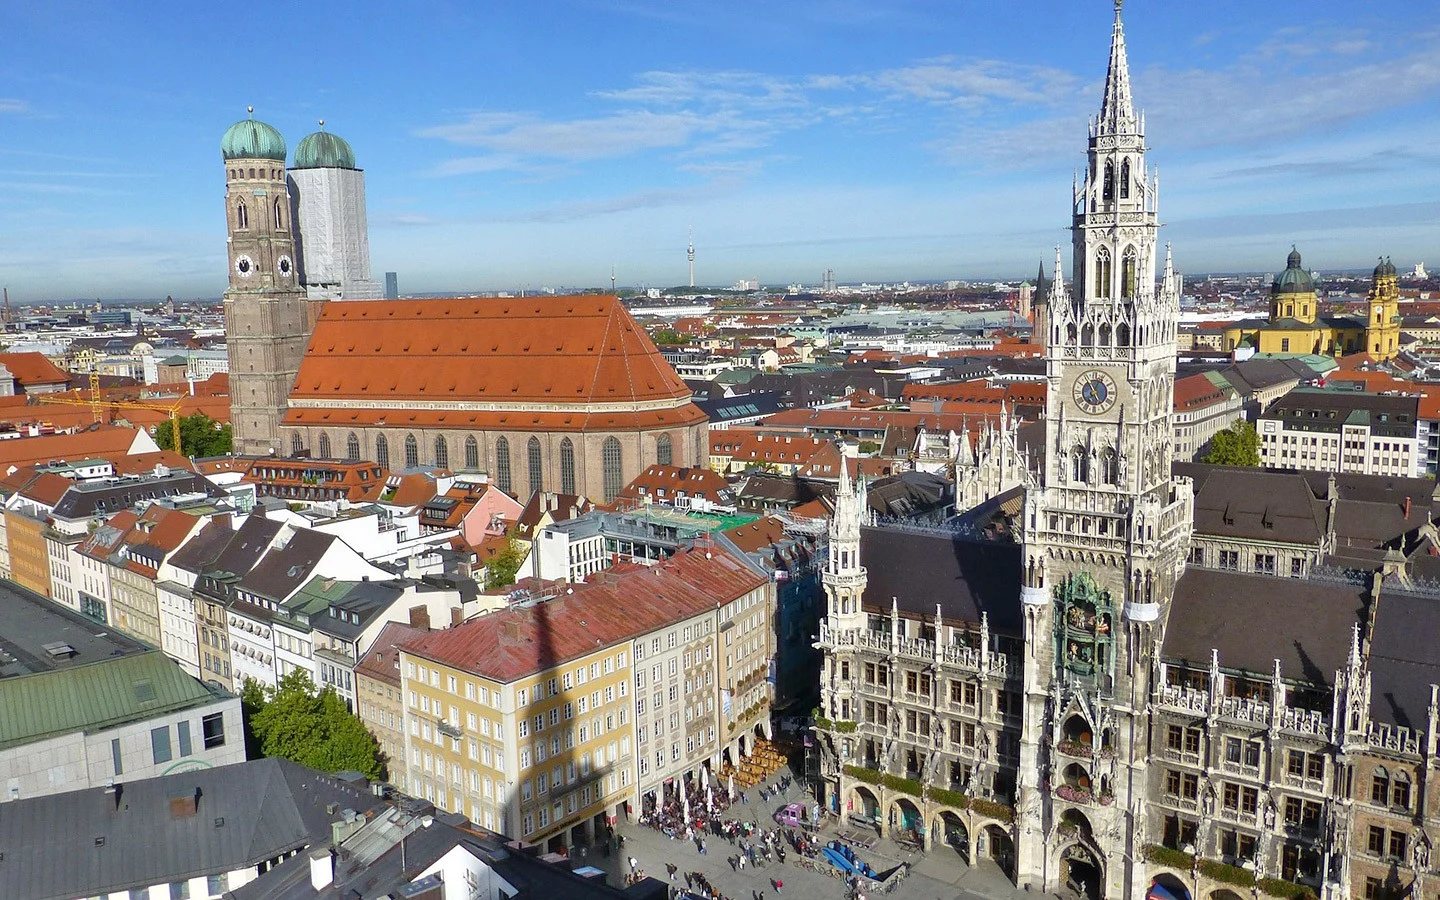 Views over Munich from St Peter’s Church